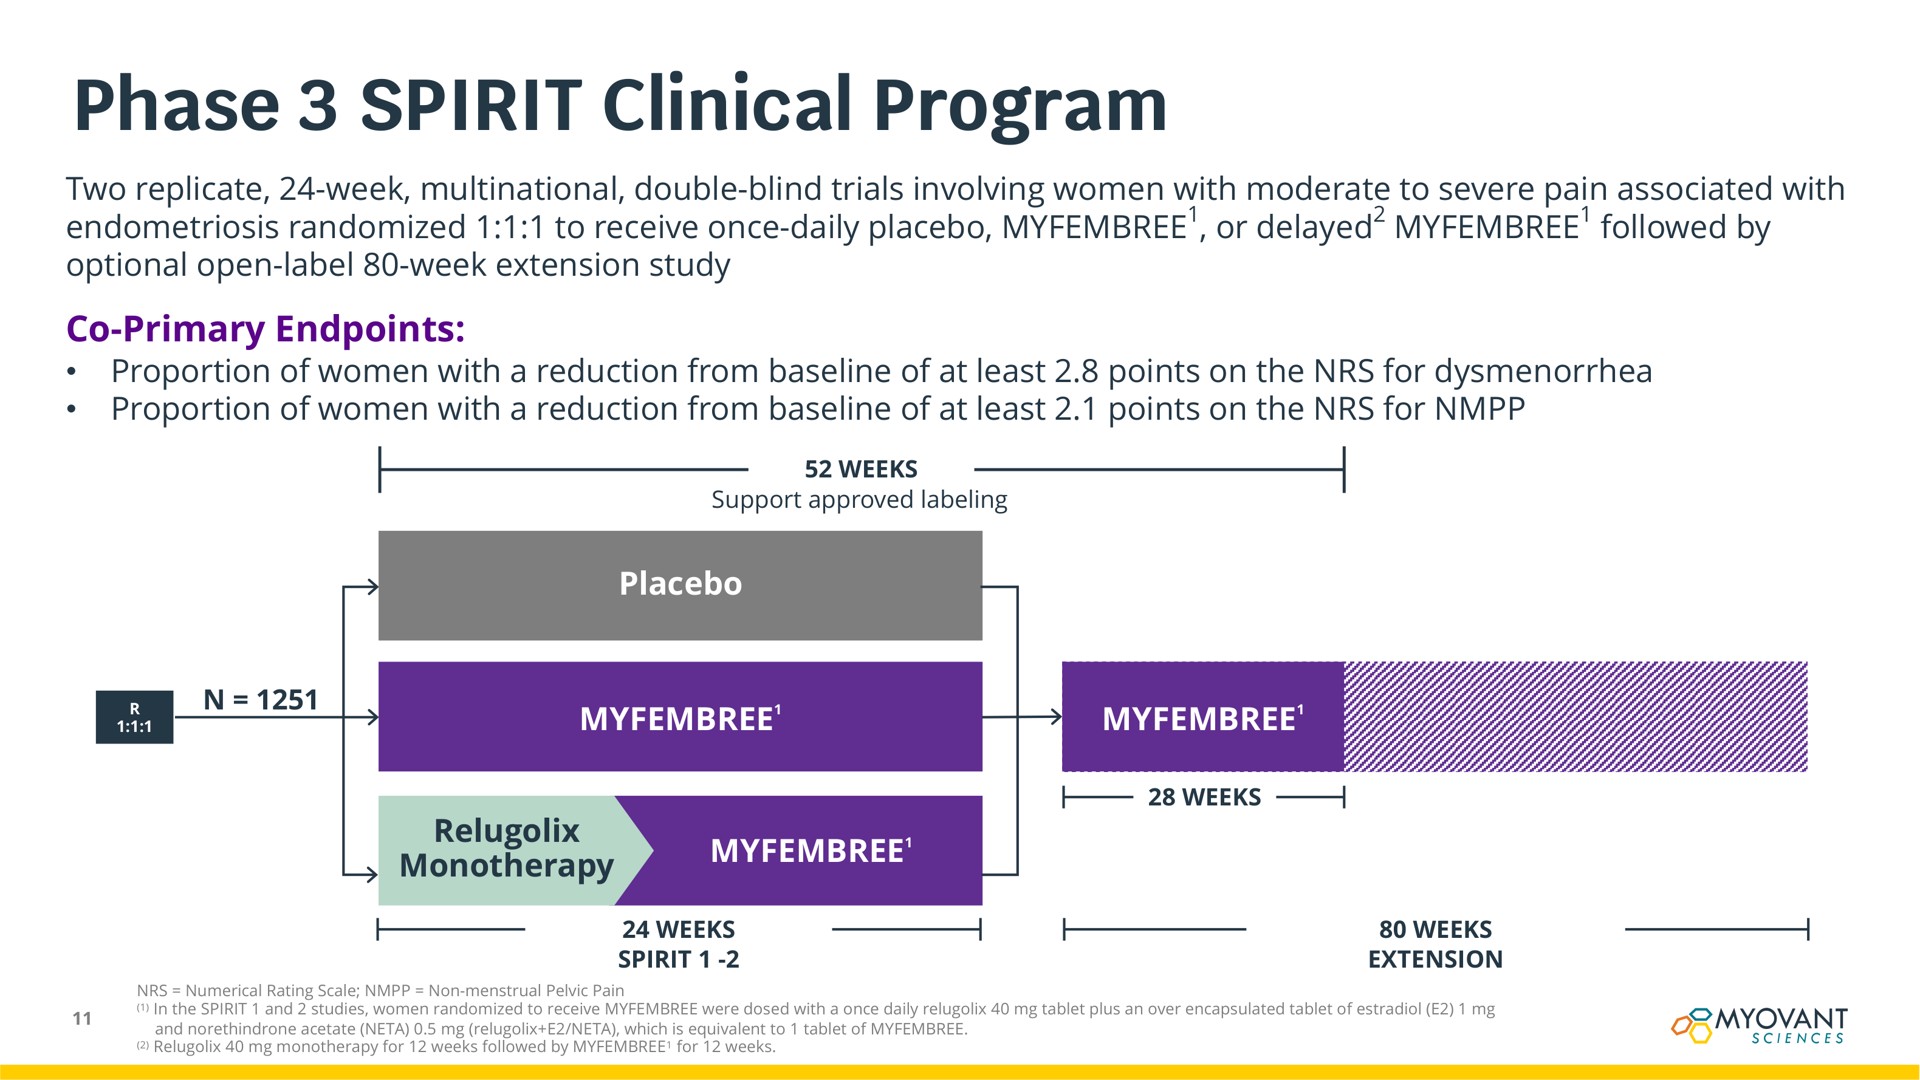 phase spirit clinical program | Myovant Sciences